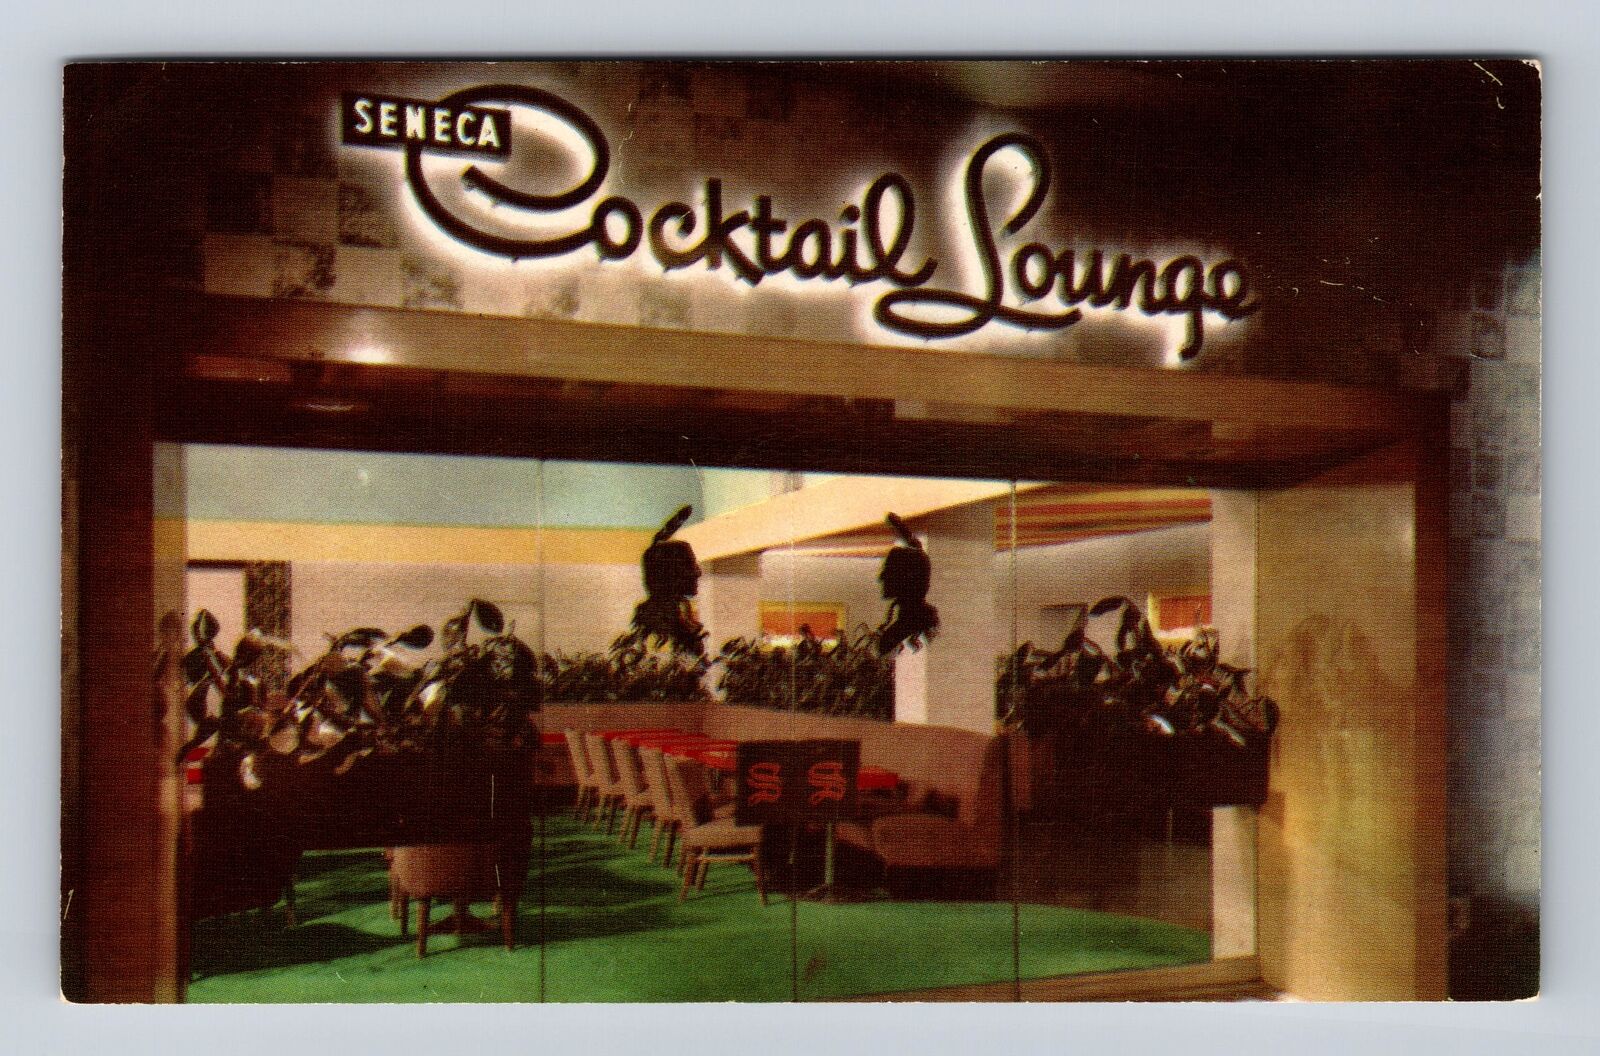 Rochester NY-New York, Hotel Seneca Cocktail Lounge Advertising Vintage Postcard